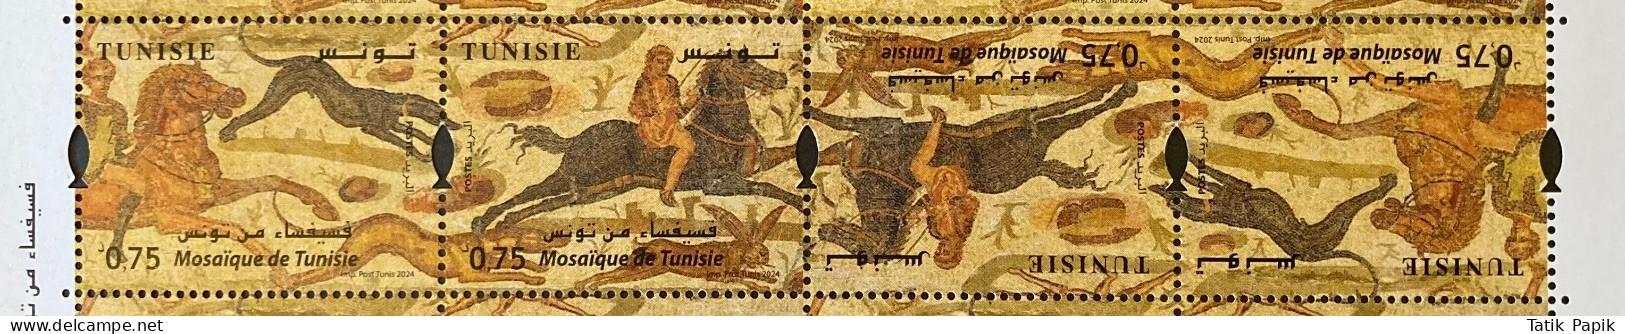 2024 Tunisie Tunisia Mosaic Horse Dog 2 Pairs Head To Tail Cheval Chevalin Jockey   MNH New - Tunisia (1956-...)